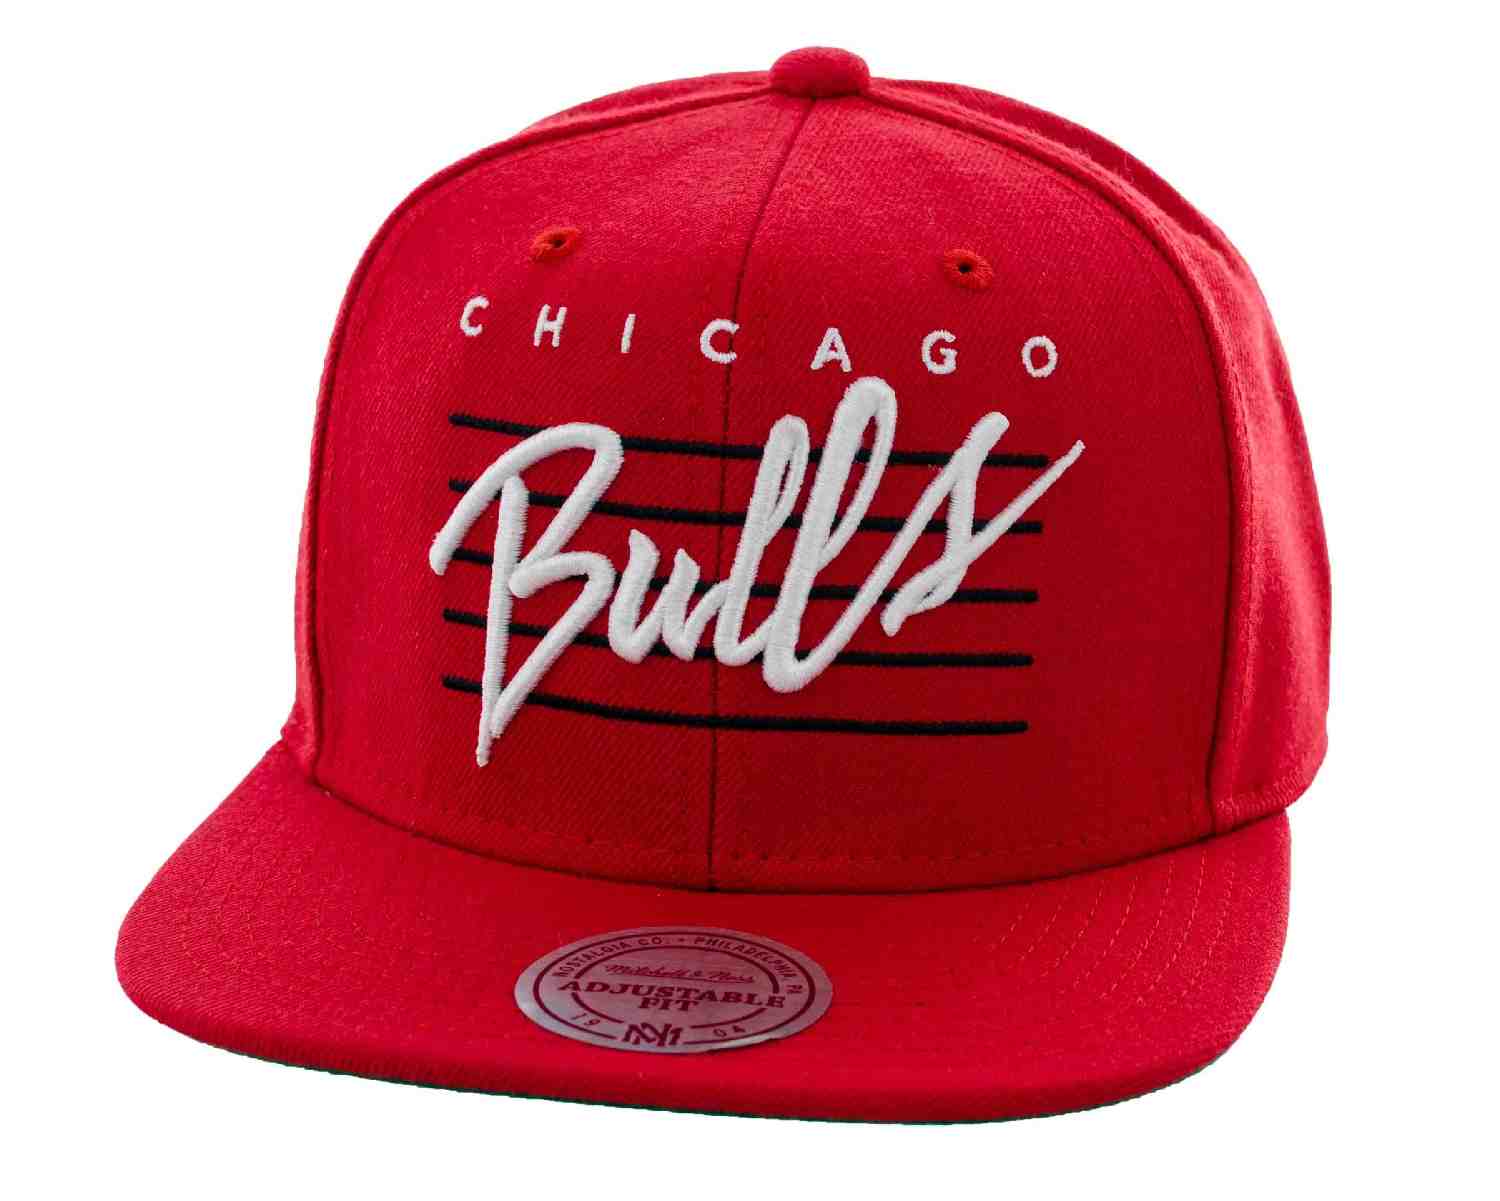 Bulls Cursive Logo - Caps MITCHELL & NESS Retro Script Chicago Bulls BULLS